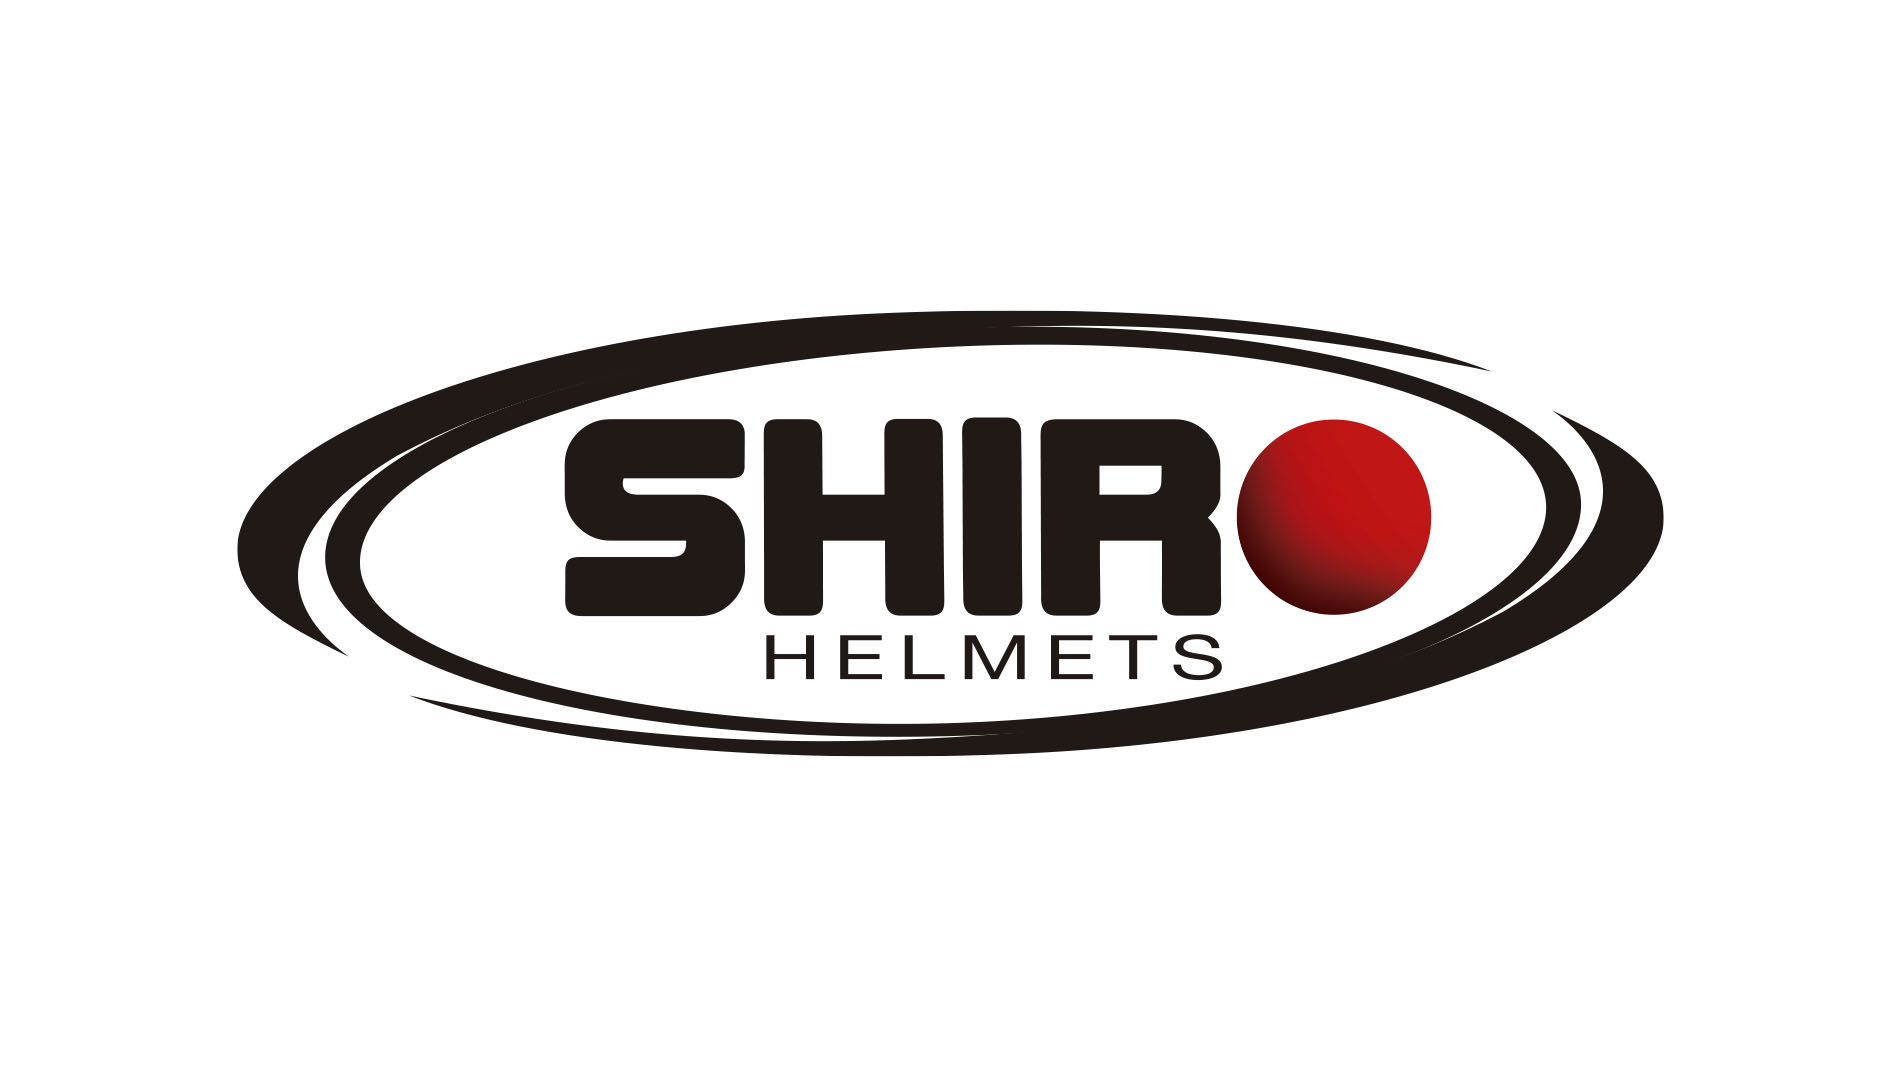 Shiro helmets